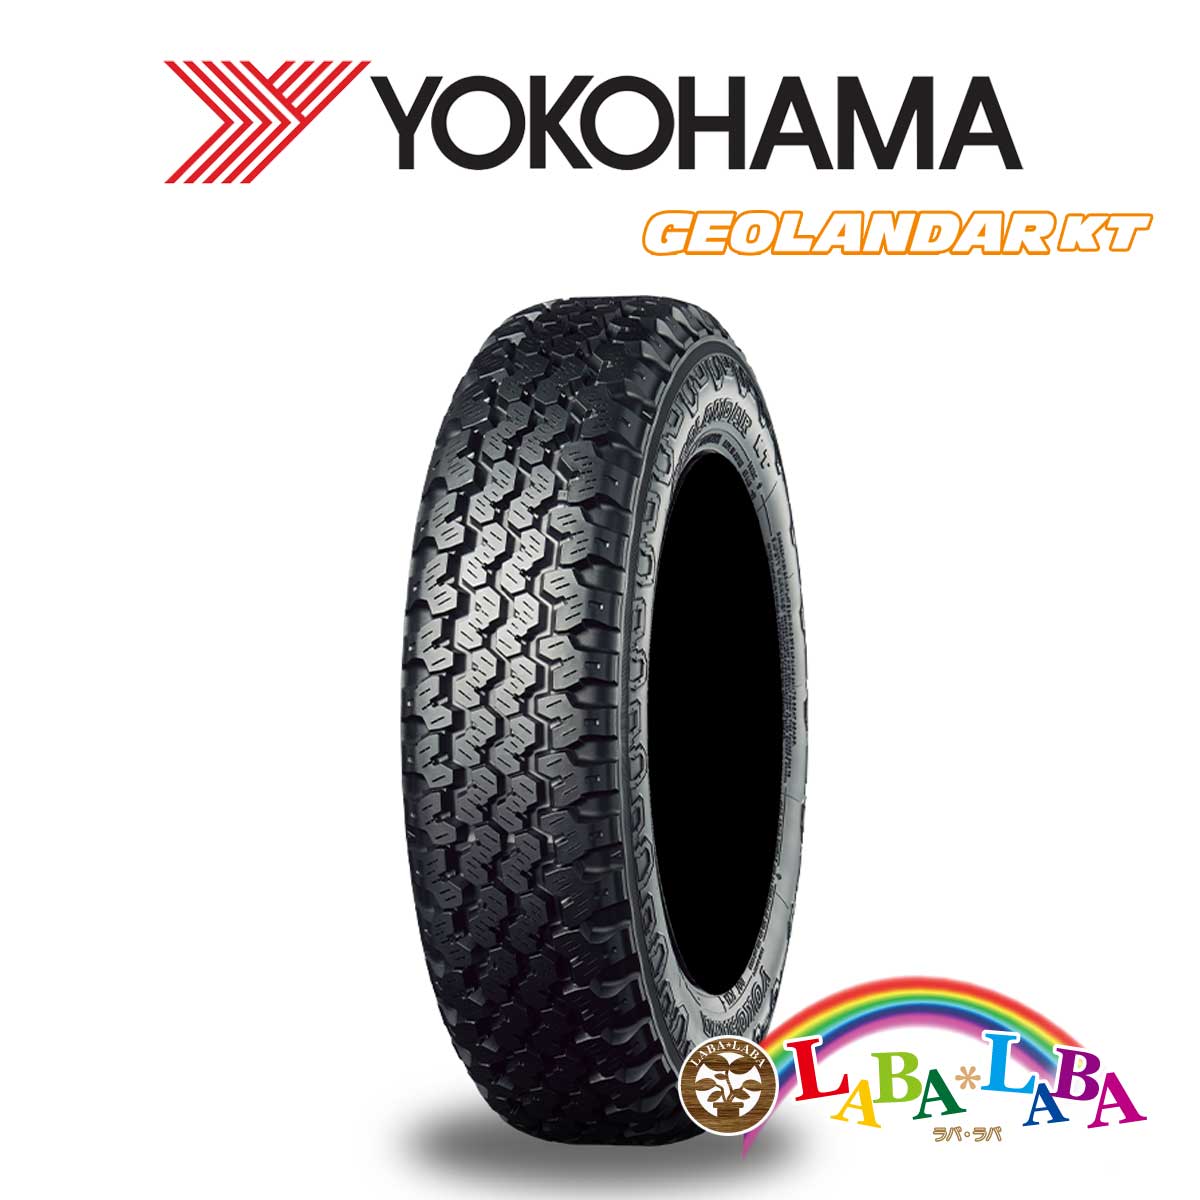 YOKOHAMA GEOLANDAR KT Y828 145/80R12 80/78N サマータイヤ 軽トラ バン 4本セット